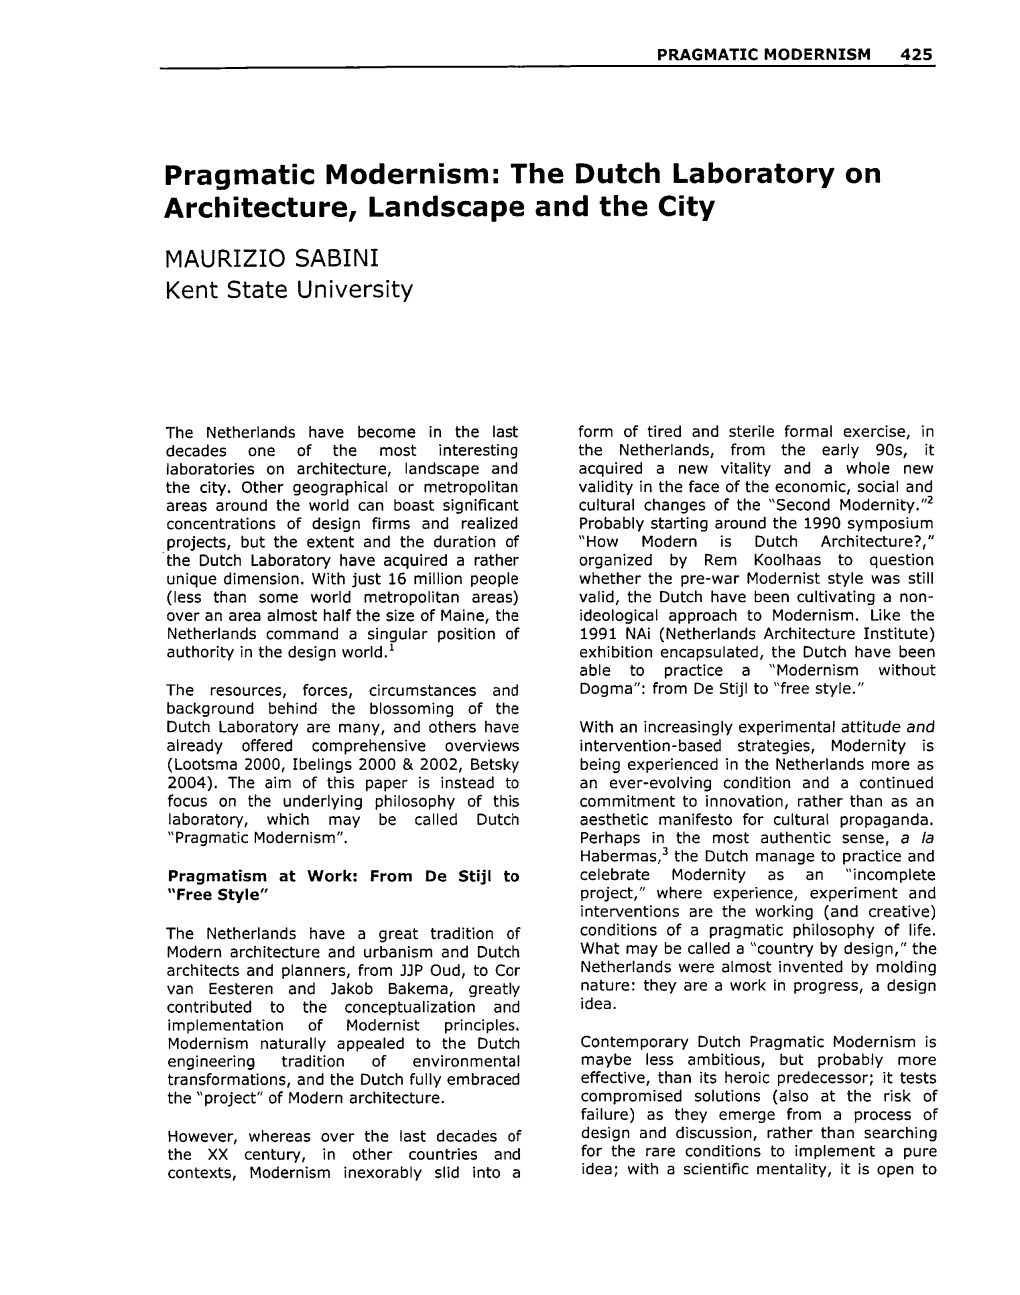 Pragmatic Modernism: the Dutch Laboratory on Architecture, Landscape and the City MAURIZIO SABIN1 Kent State University